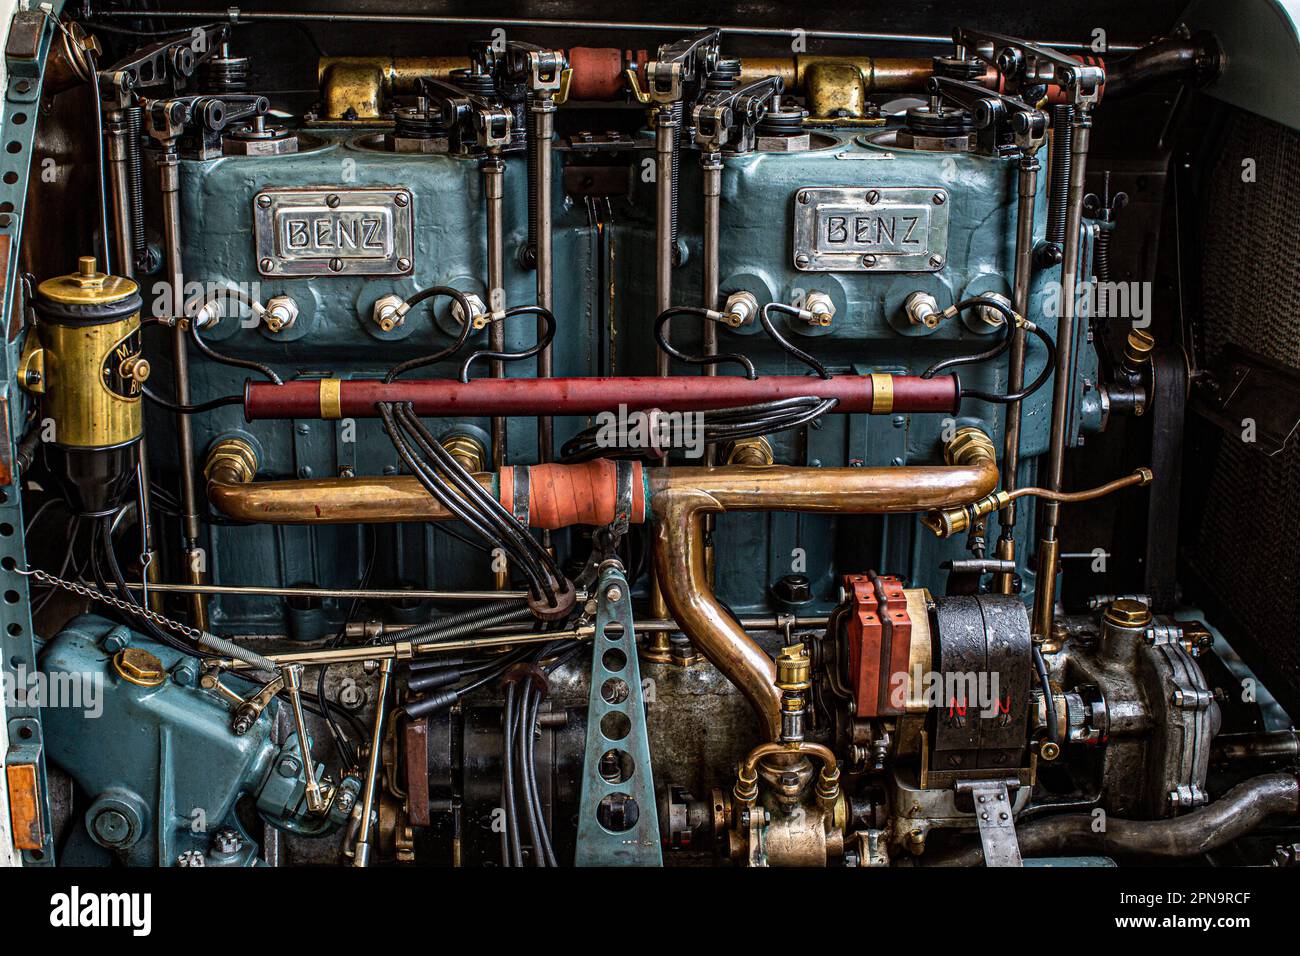 Pre War Mercedes Benz car engine  ,United Kingdom. Stock Photo